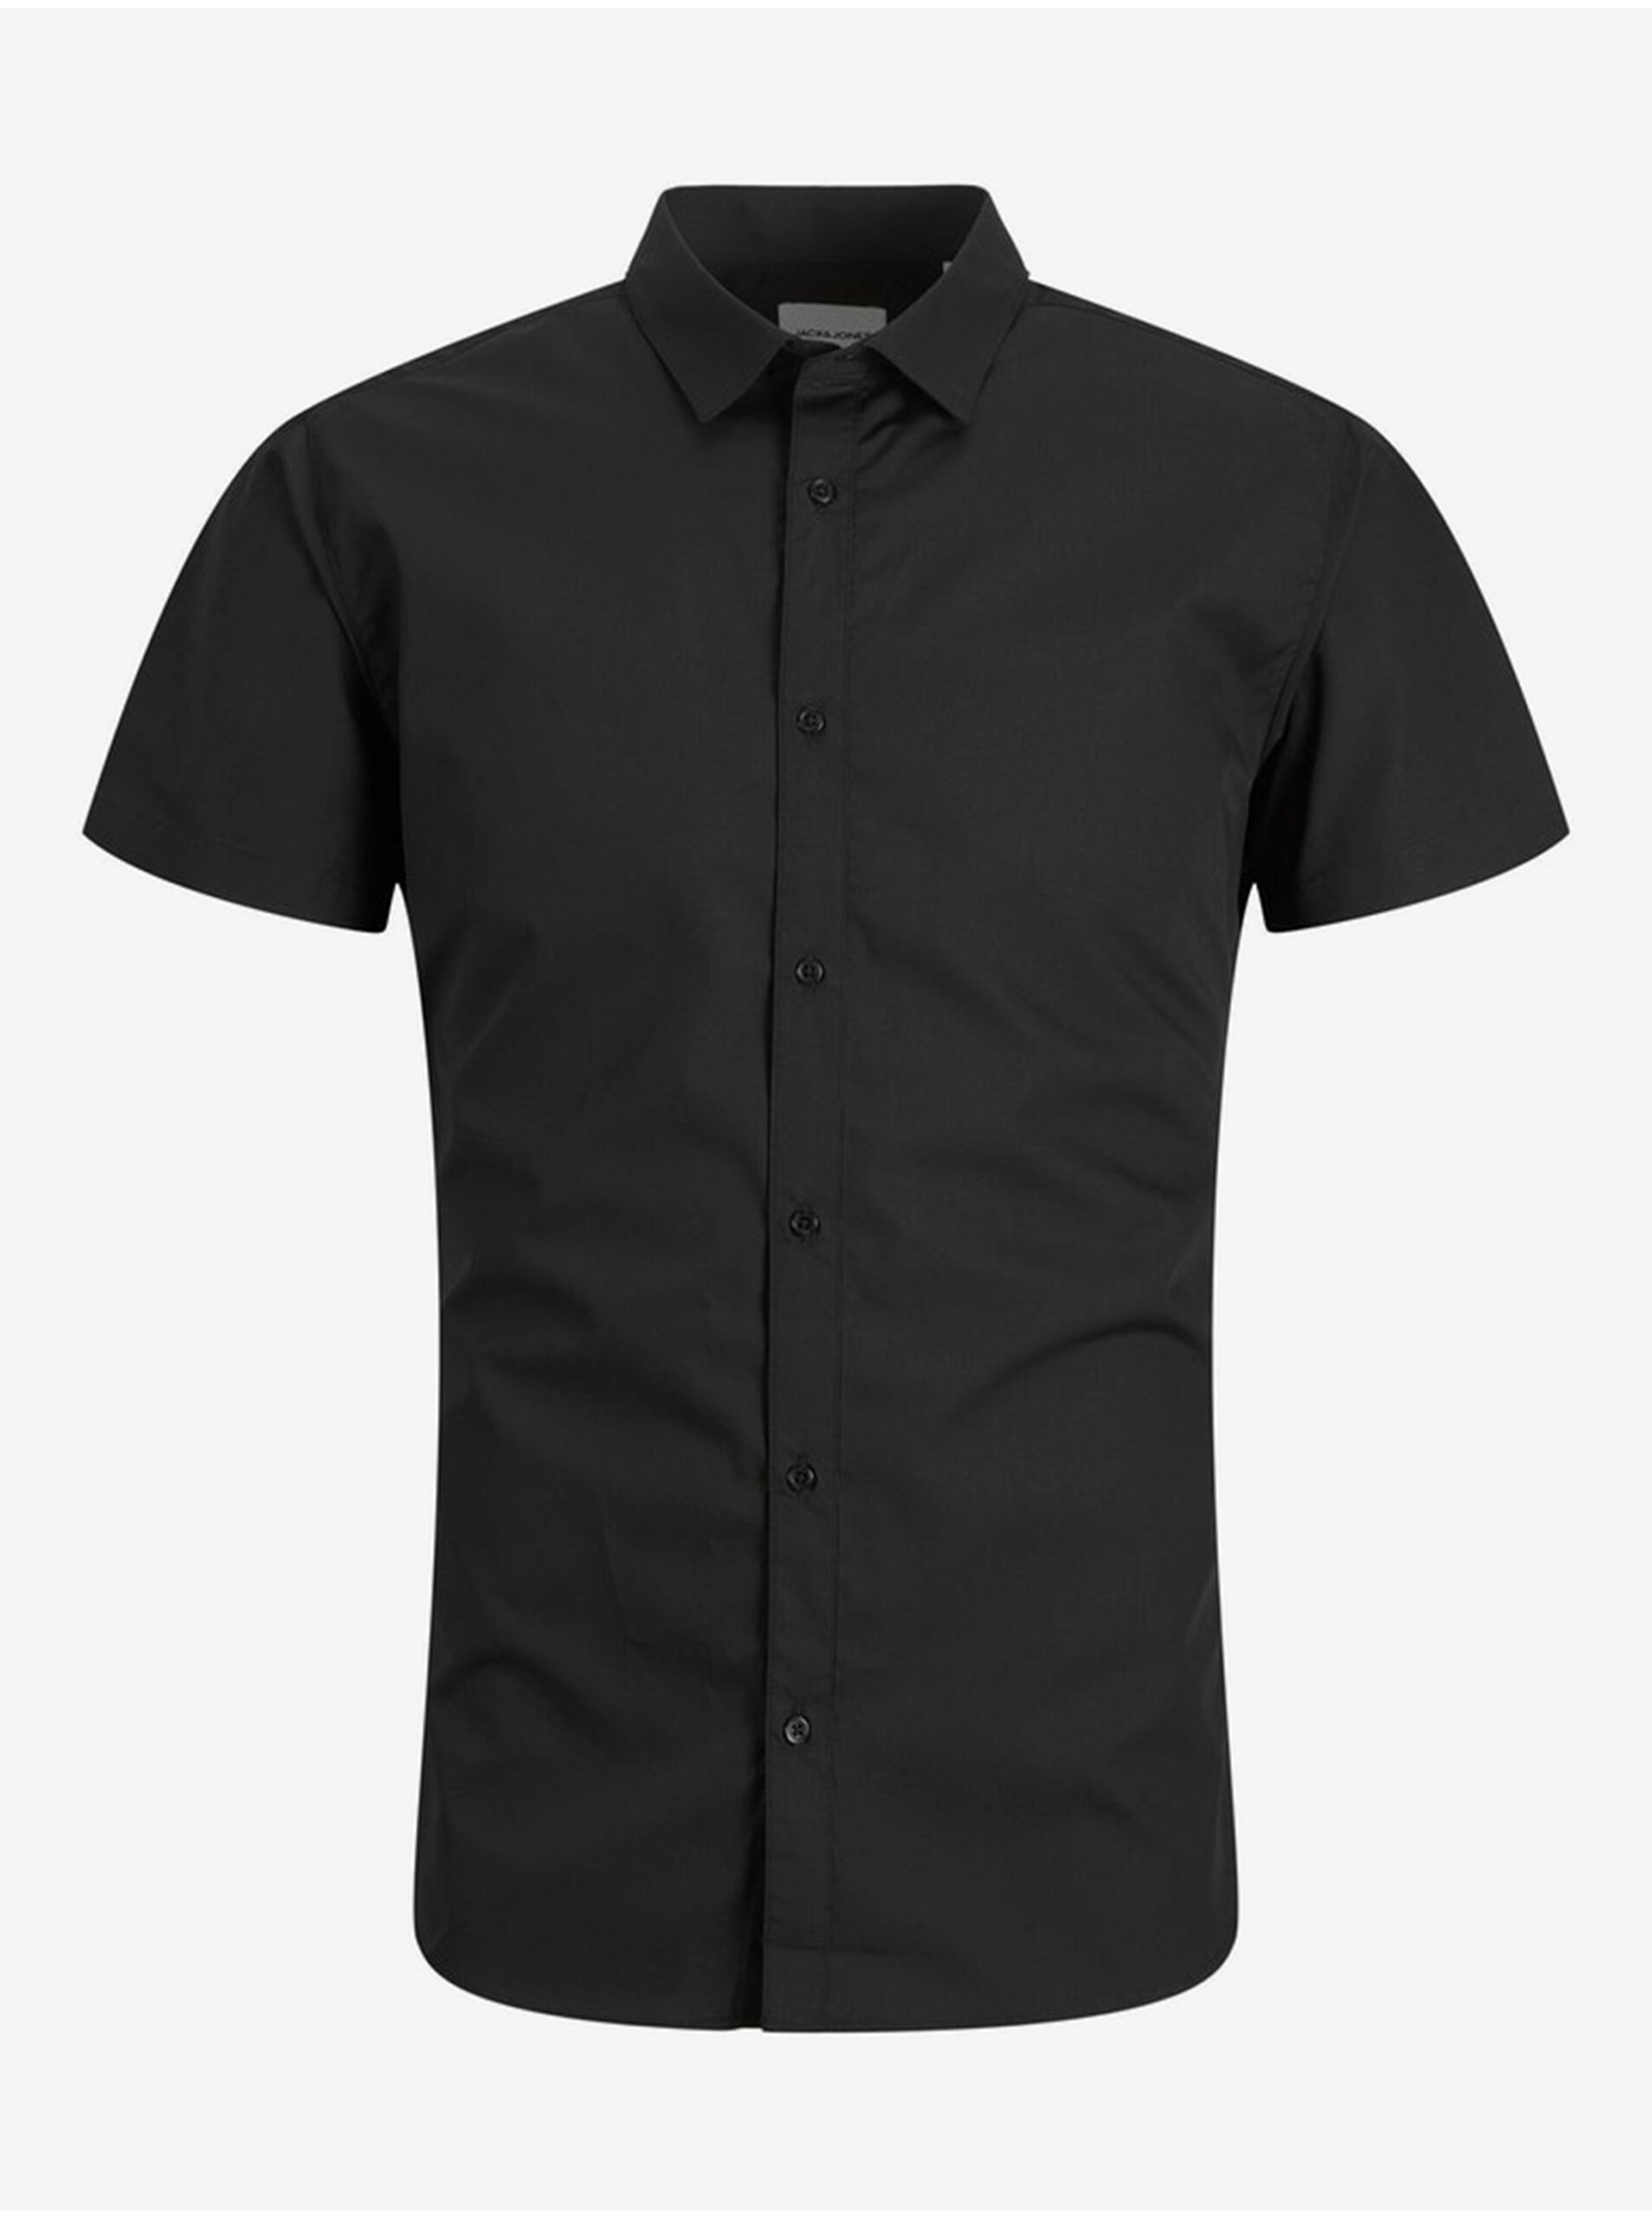 Men's Black Short Sleeve Shirt Jack & Jones Joe - Men